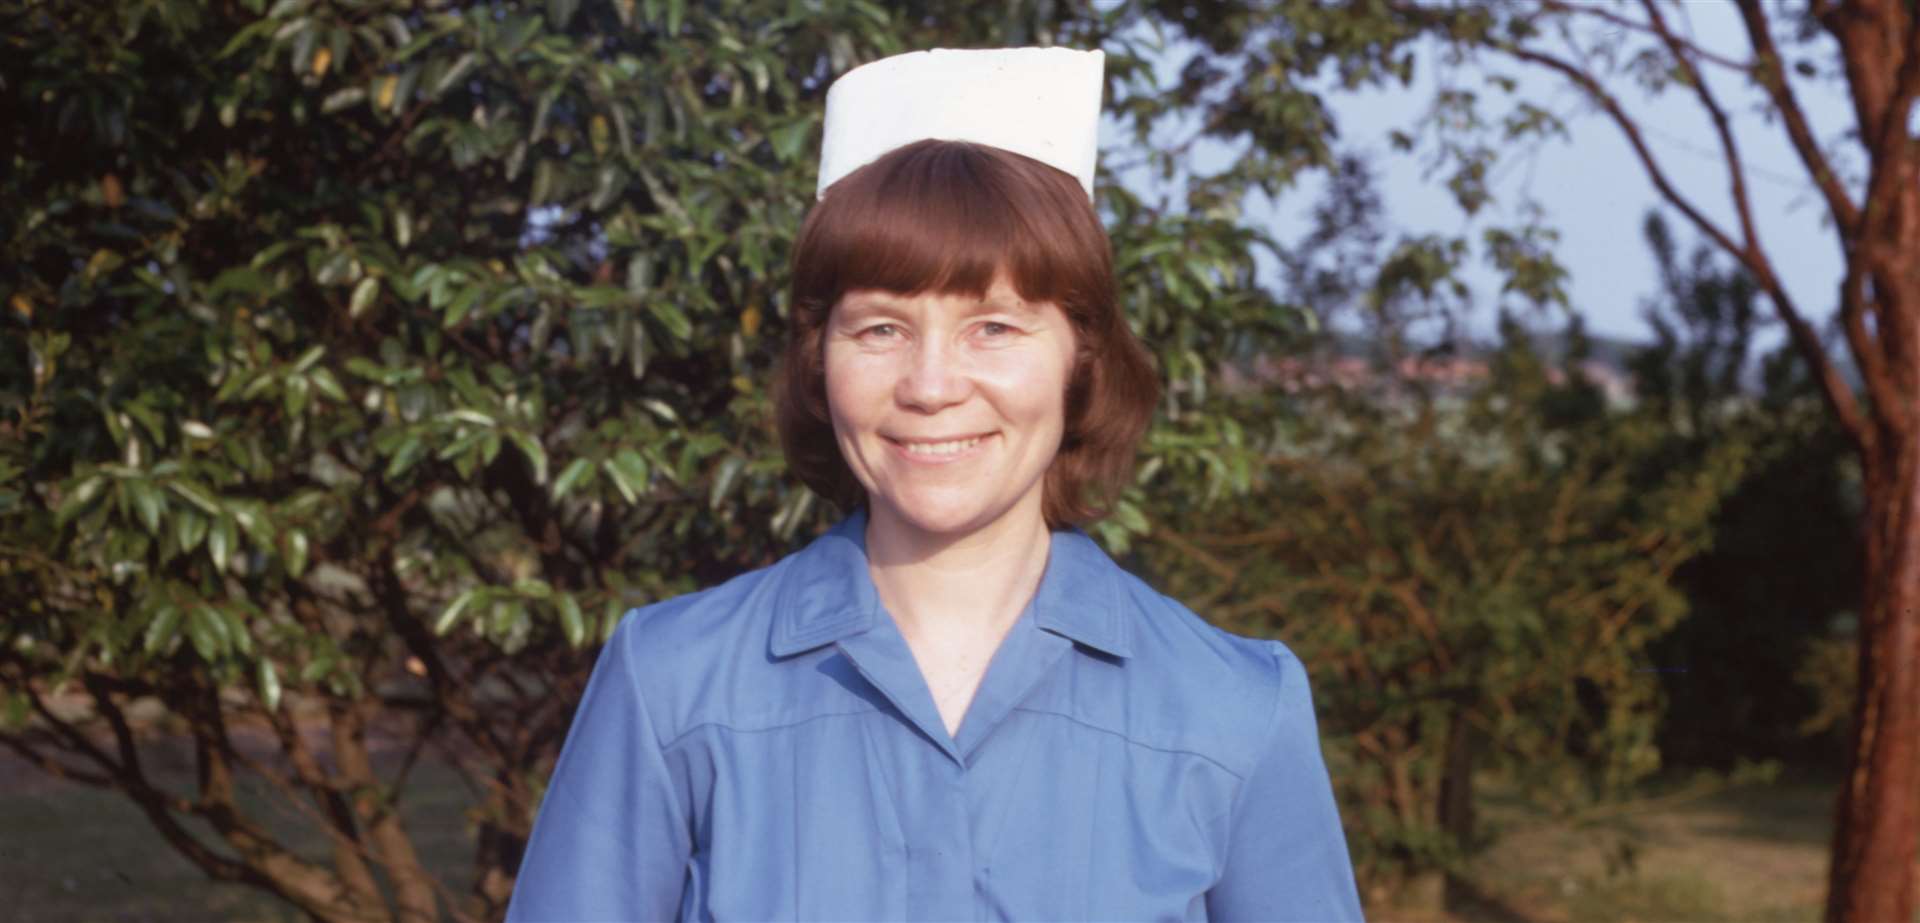 Brenda pictured as a nurse in Ecuador in 1974